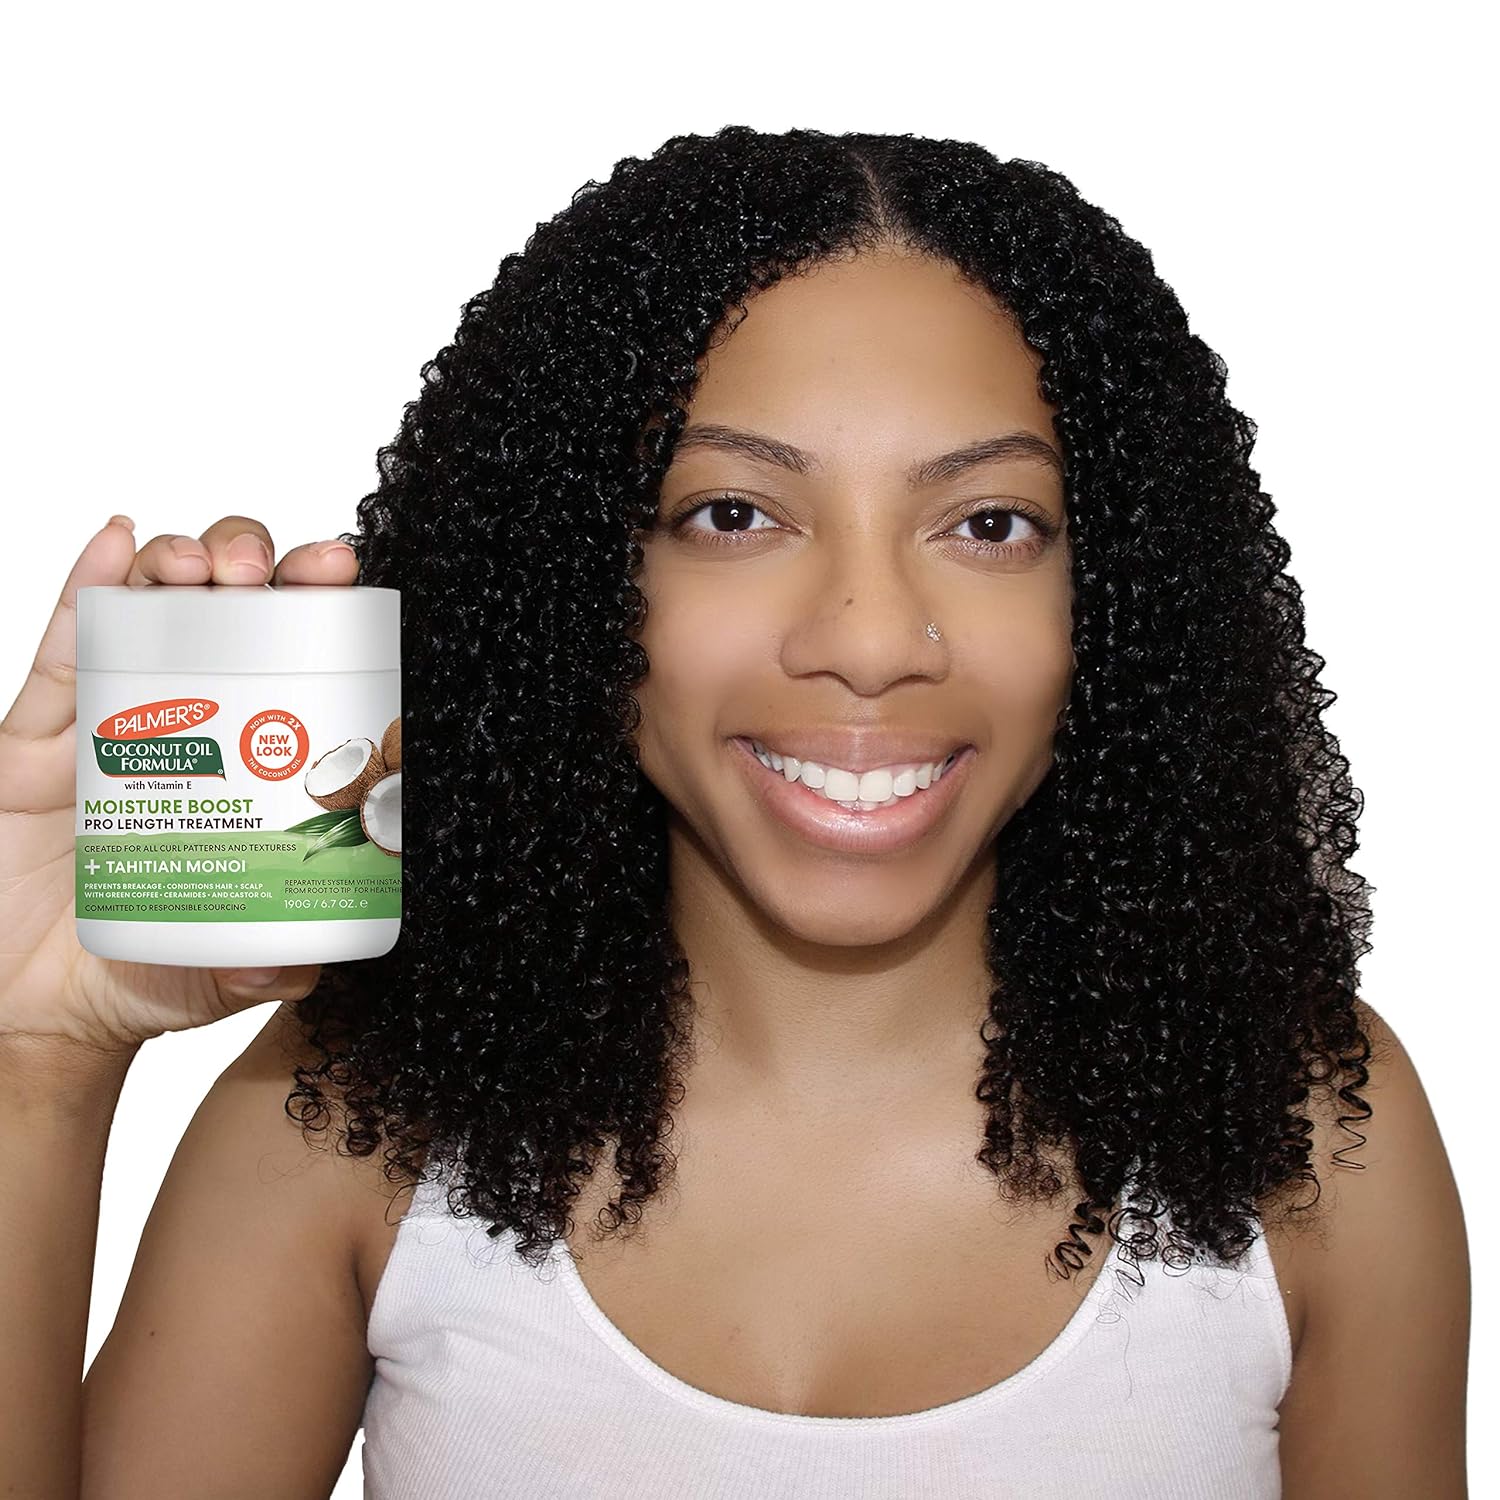 Palmer's Coconut Oil Formula Moisture Boost Pro Length Hair & Scalp Treatment, 6.7 Ounce : Beauty & Personal Care